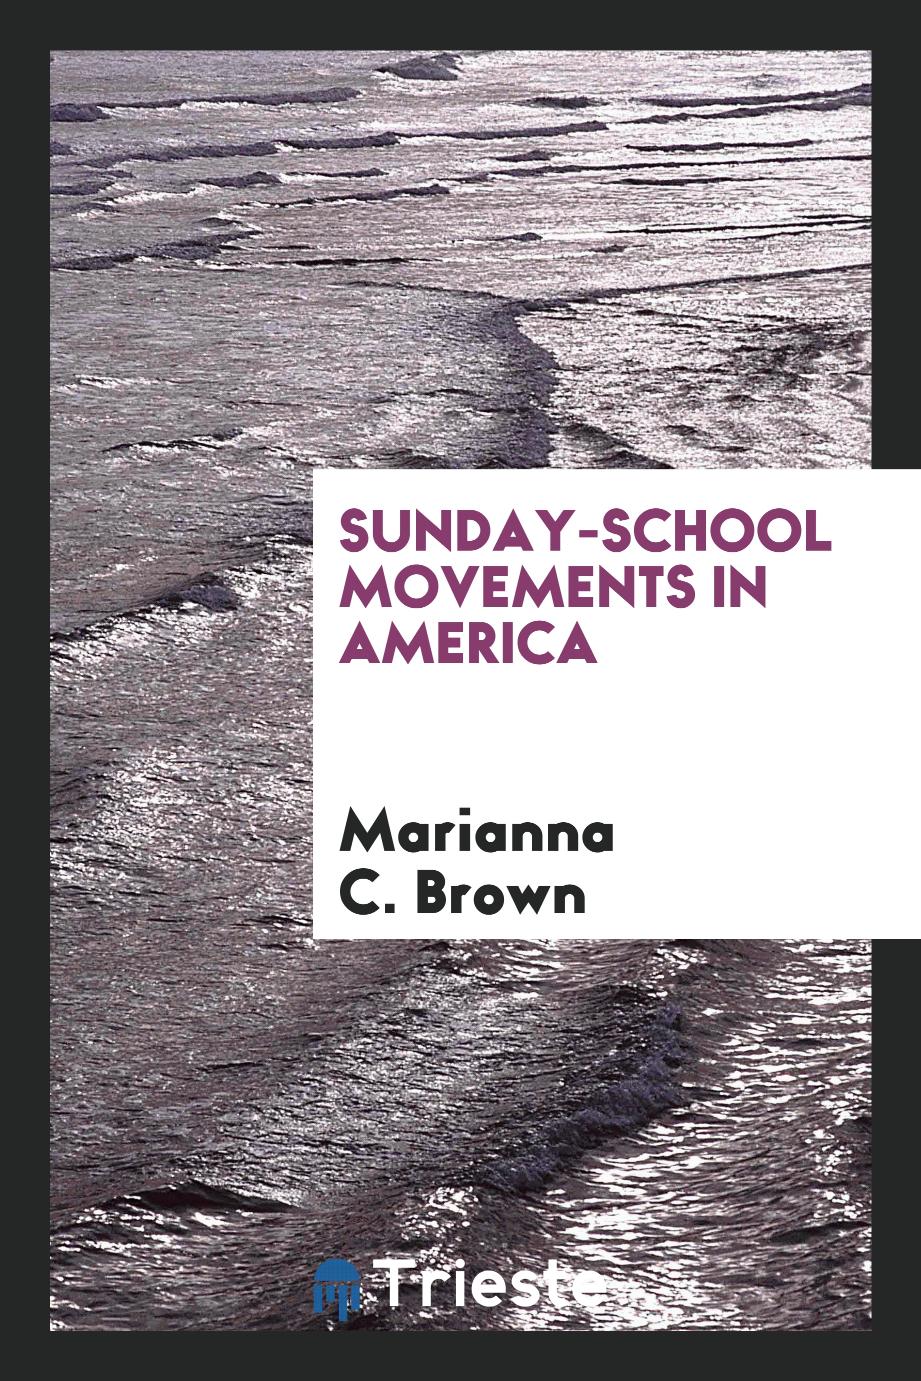 Sunday-school movements in America